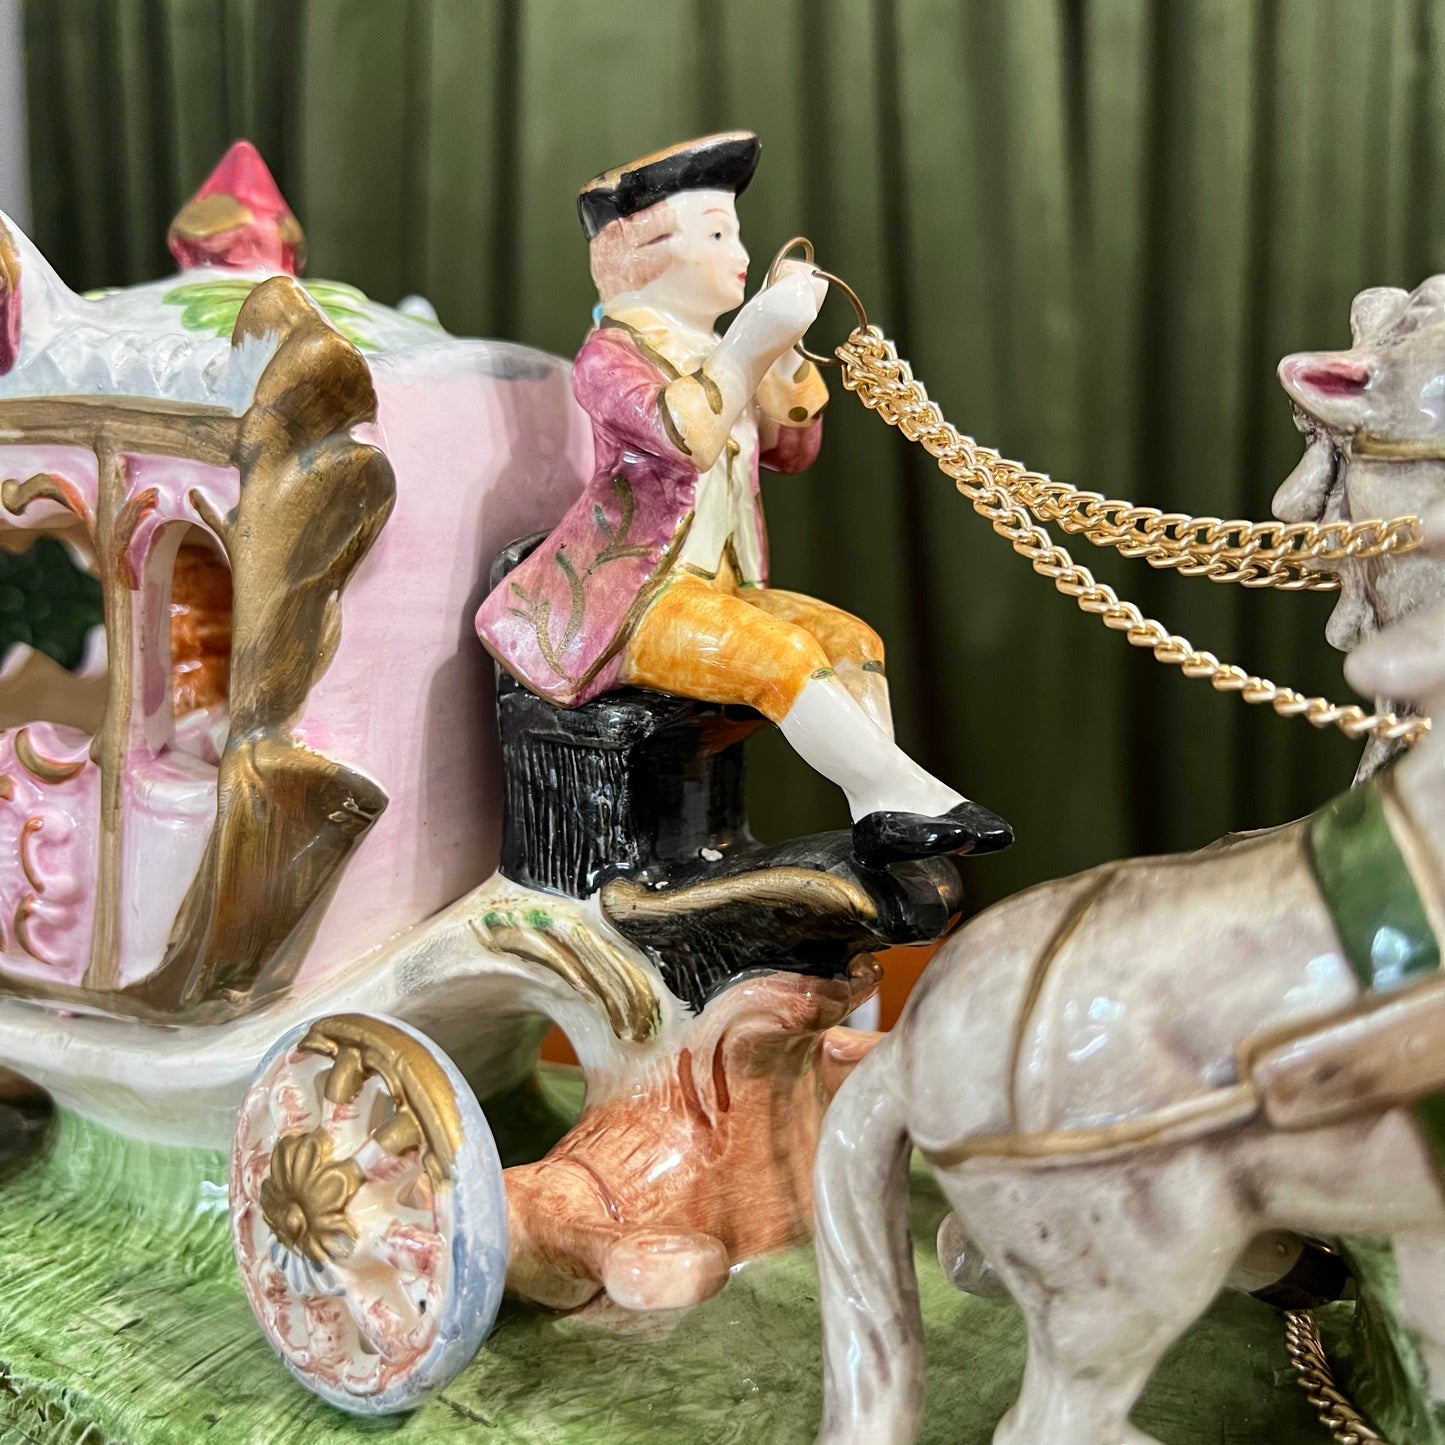 Capodimonte Porcelain Horse Drawn Royal Carriage